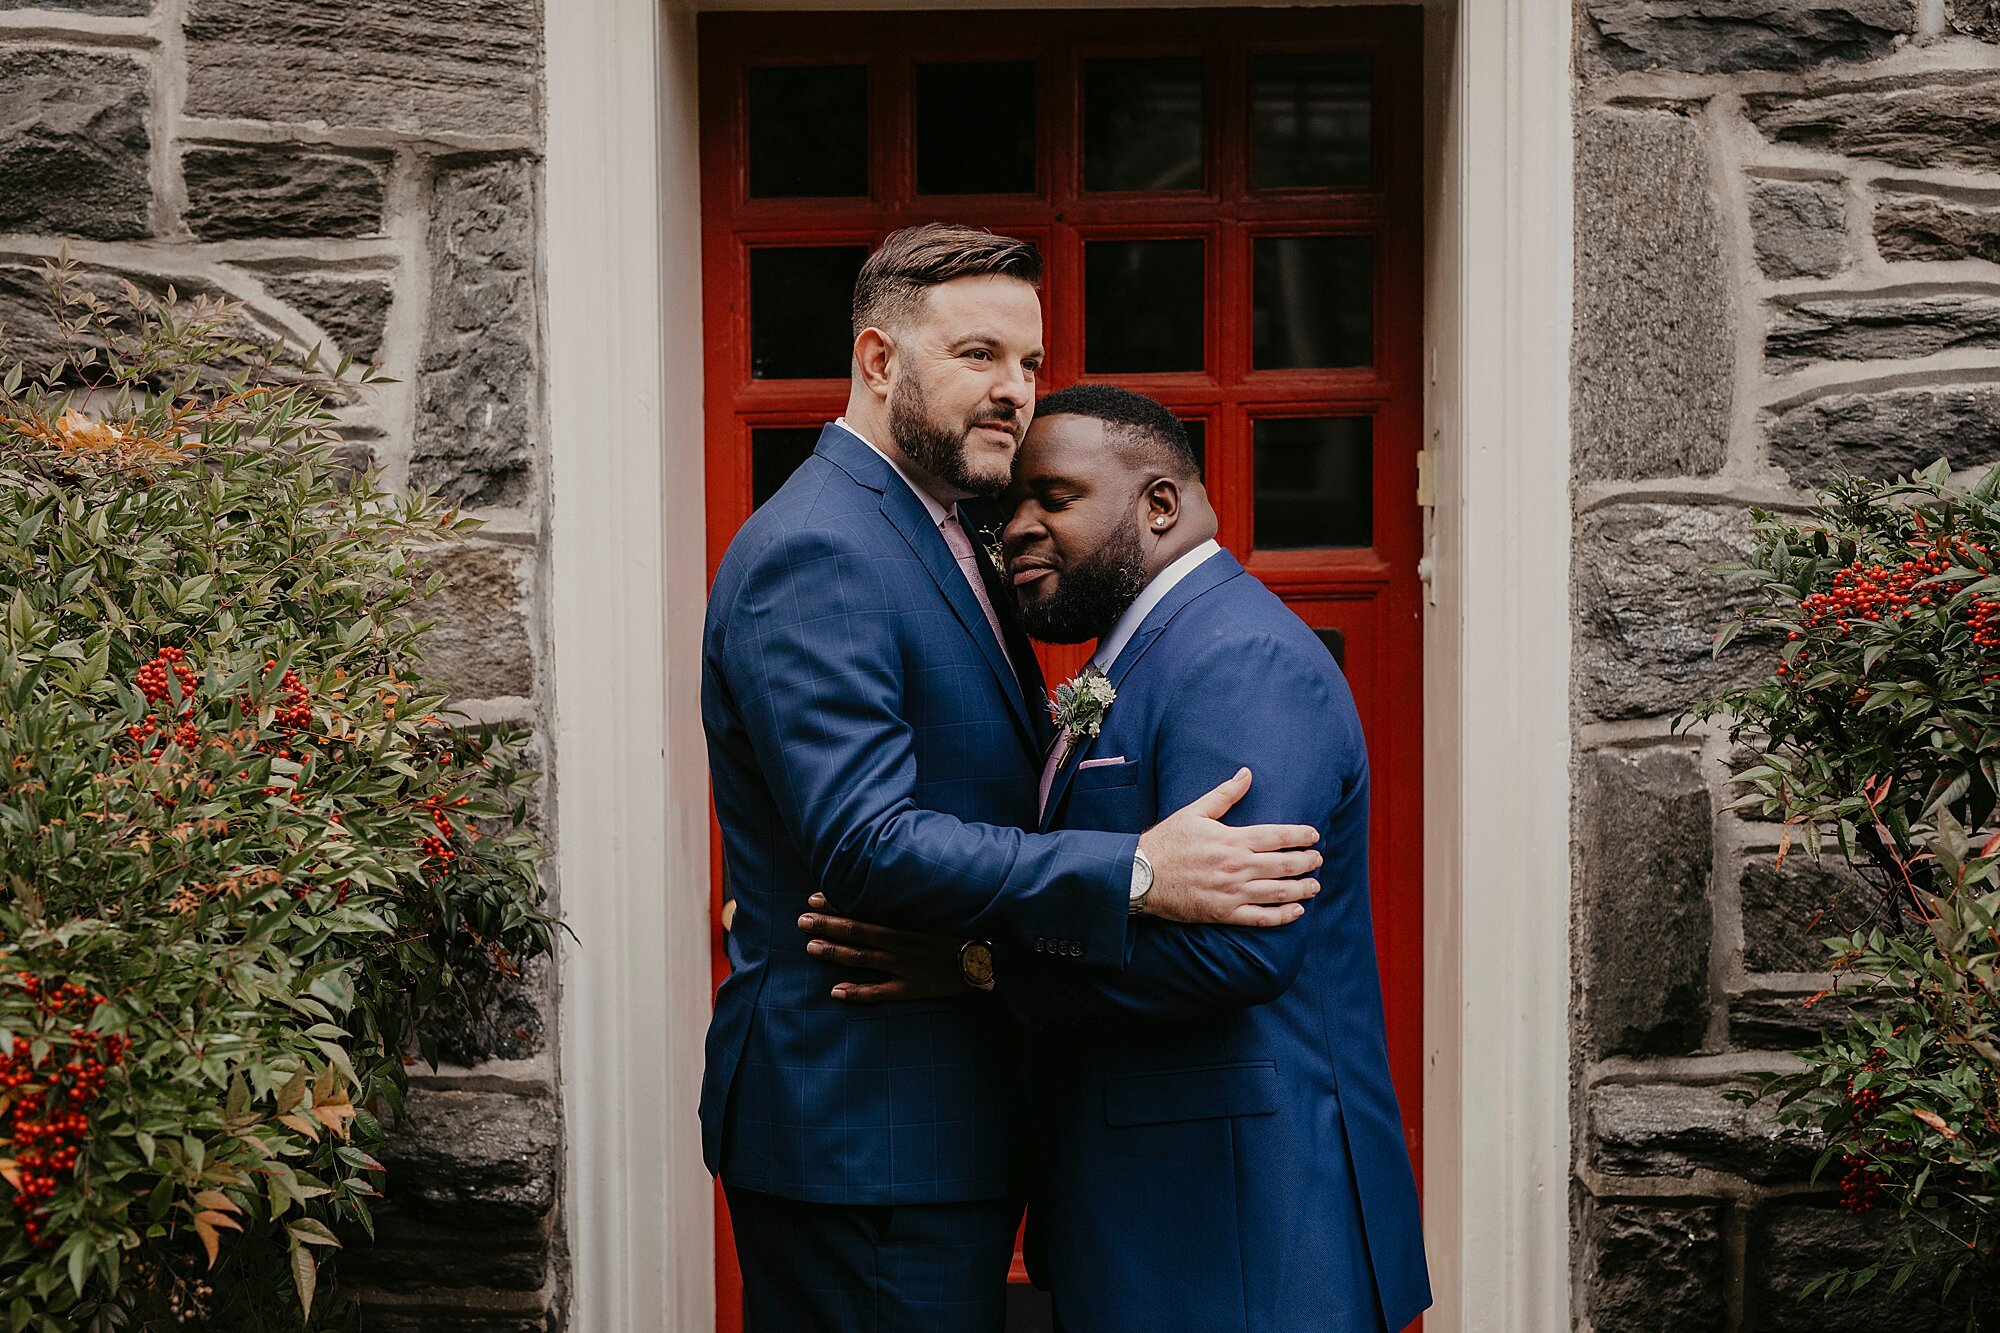 Love_by_Joe_mac_Levering_Mill_Tribute_House_Bala Cynwyd_Gay_LGBT_Wedding_Photography_Philadelphia__0050.jpg